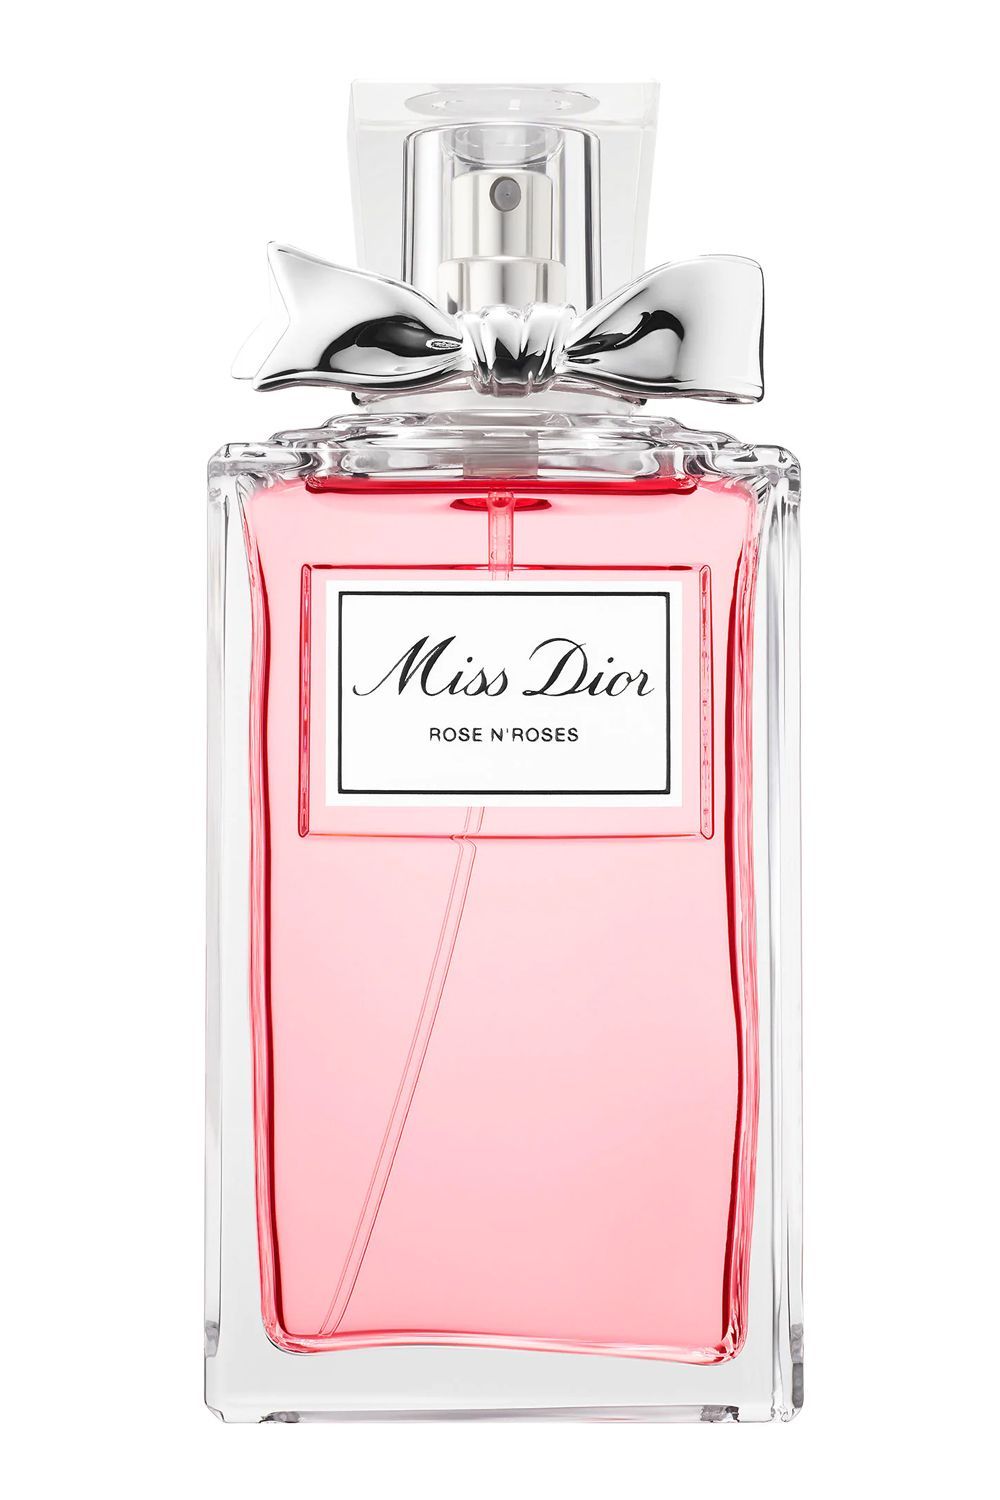 dior perfume new 2019